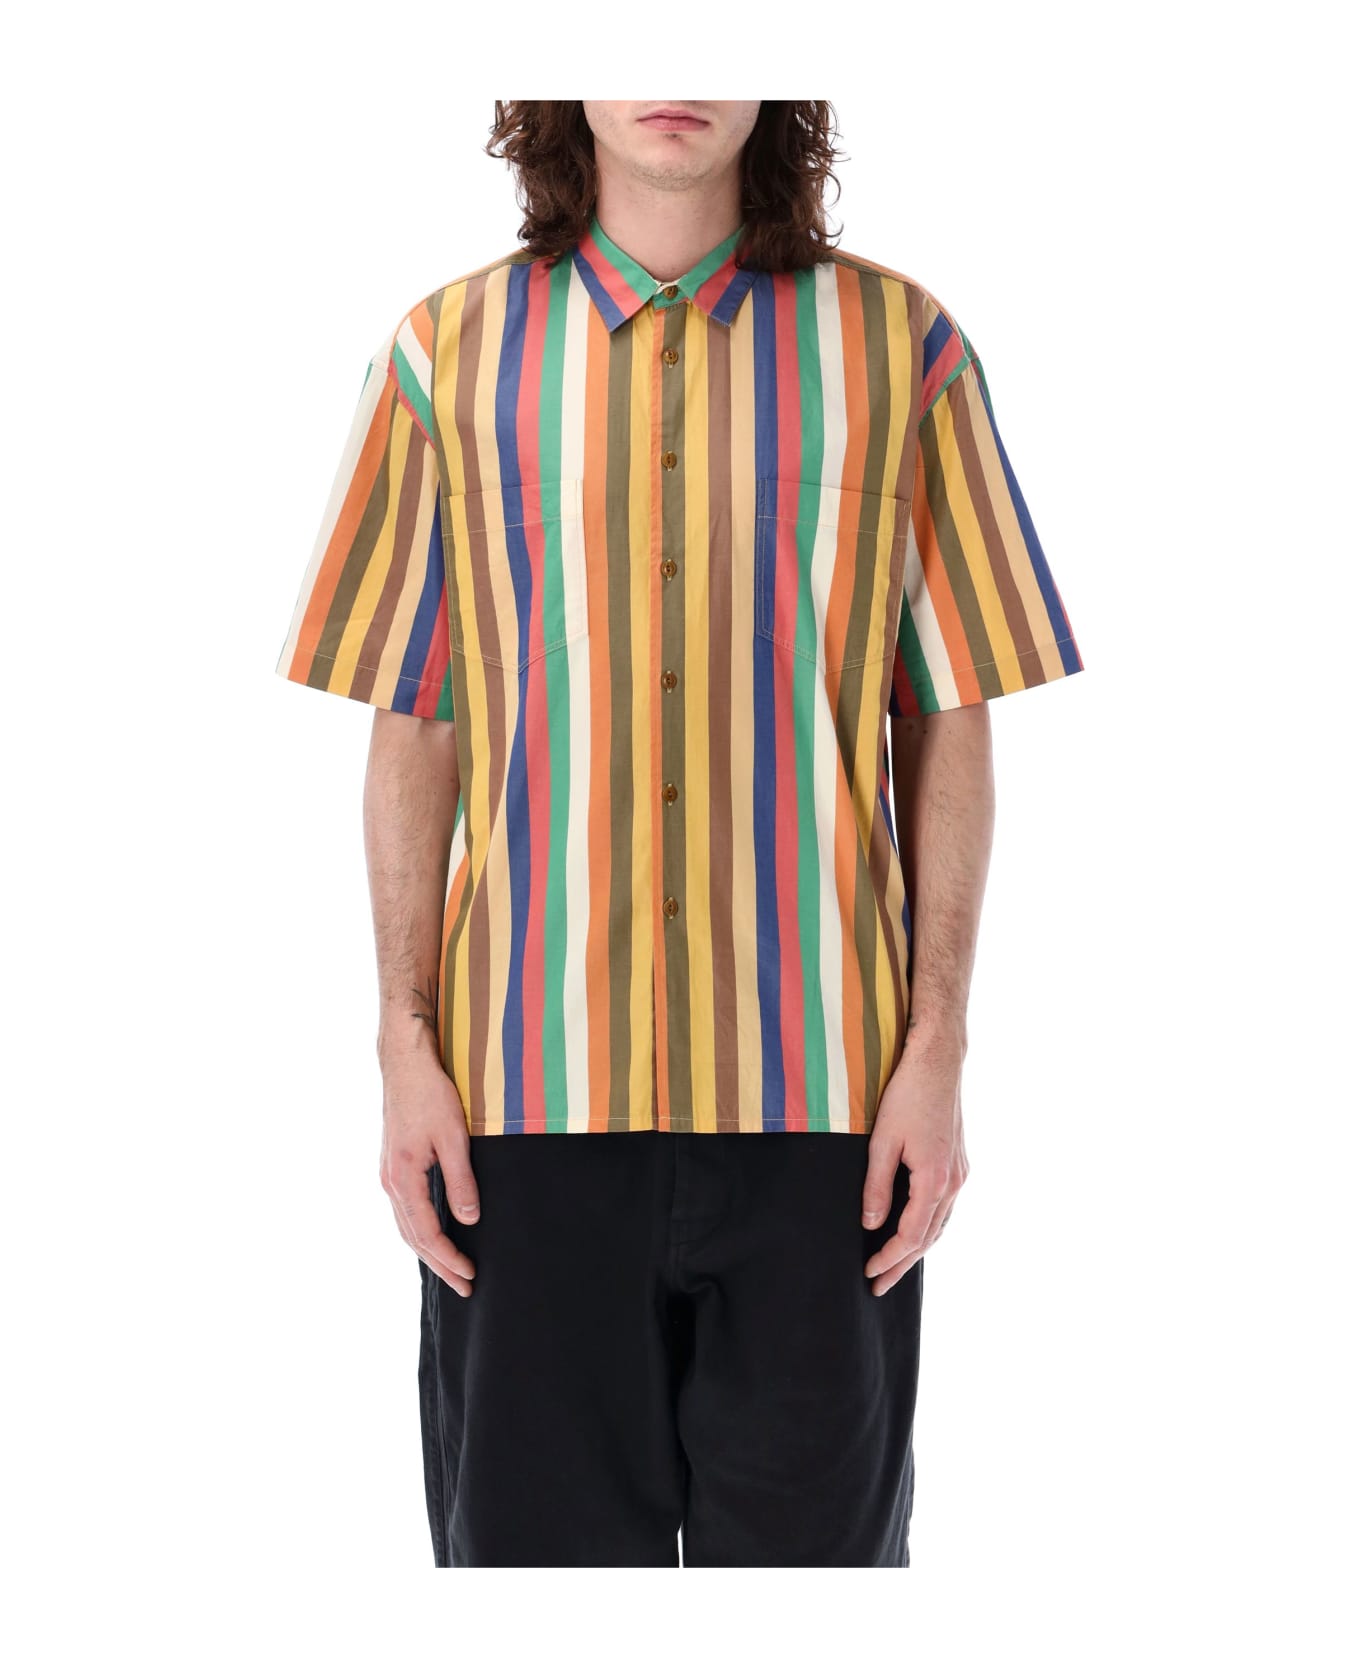 YMC Mitchum Shirt - STRIPE MULTI シャツ